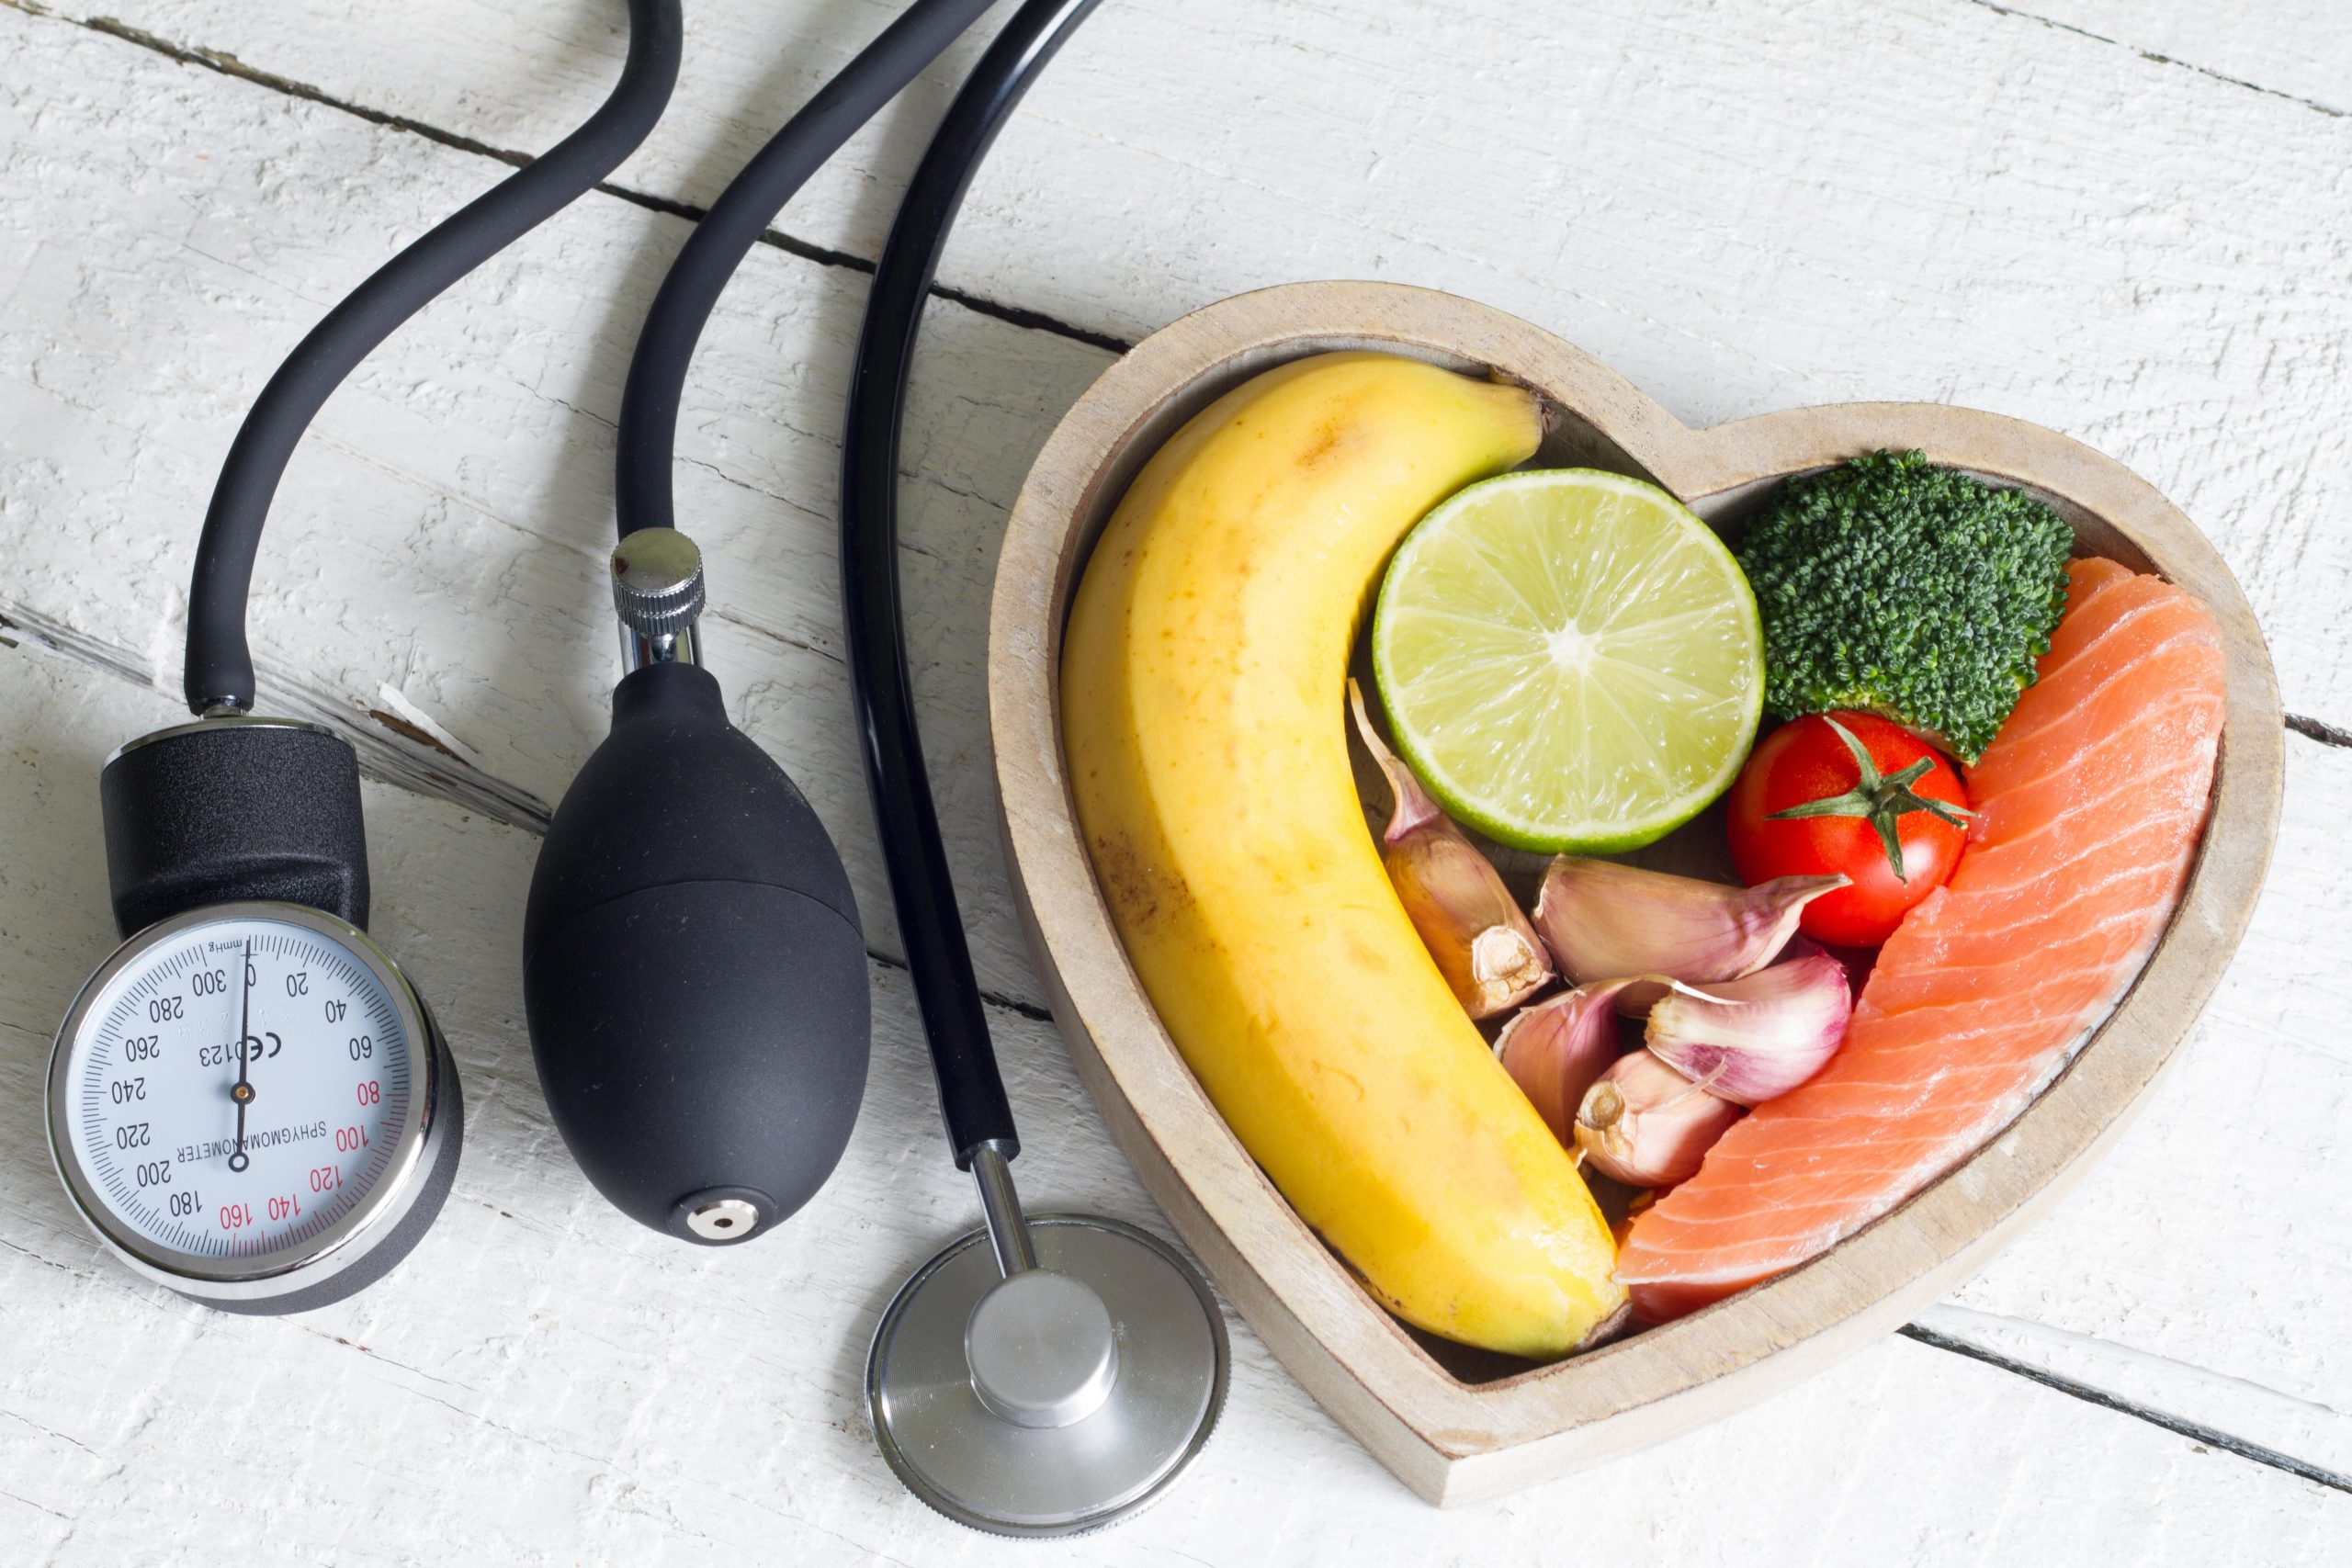 Heart Health And Blood Pressure